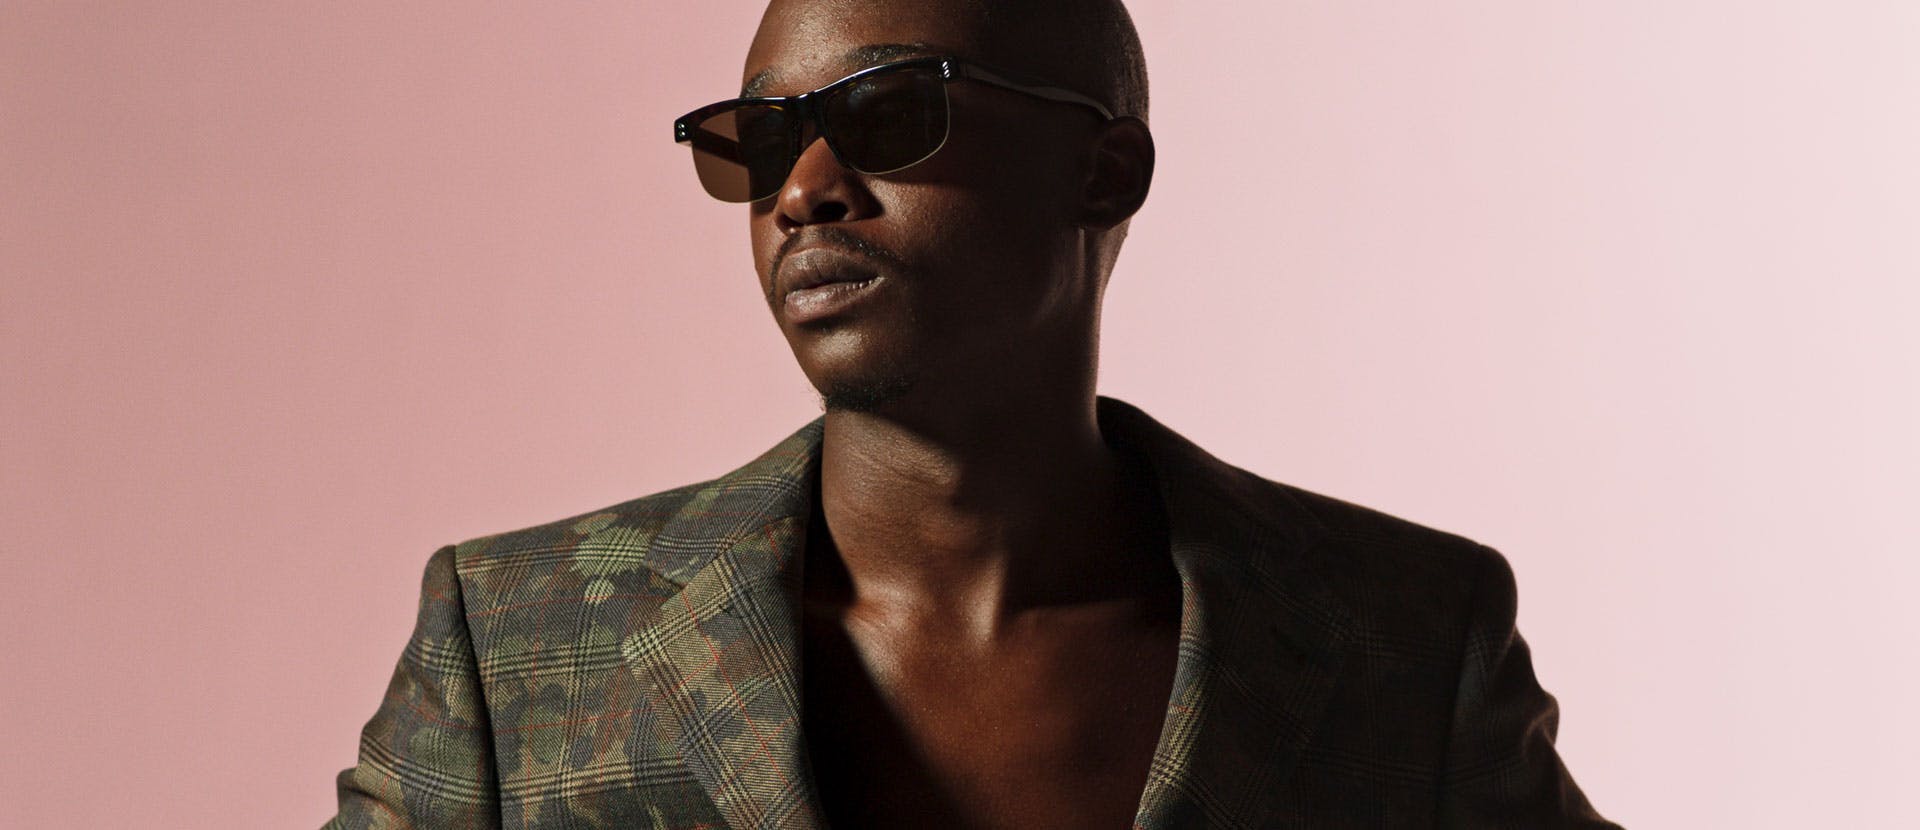 person human sunglasses accessory accessories man face